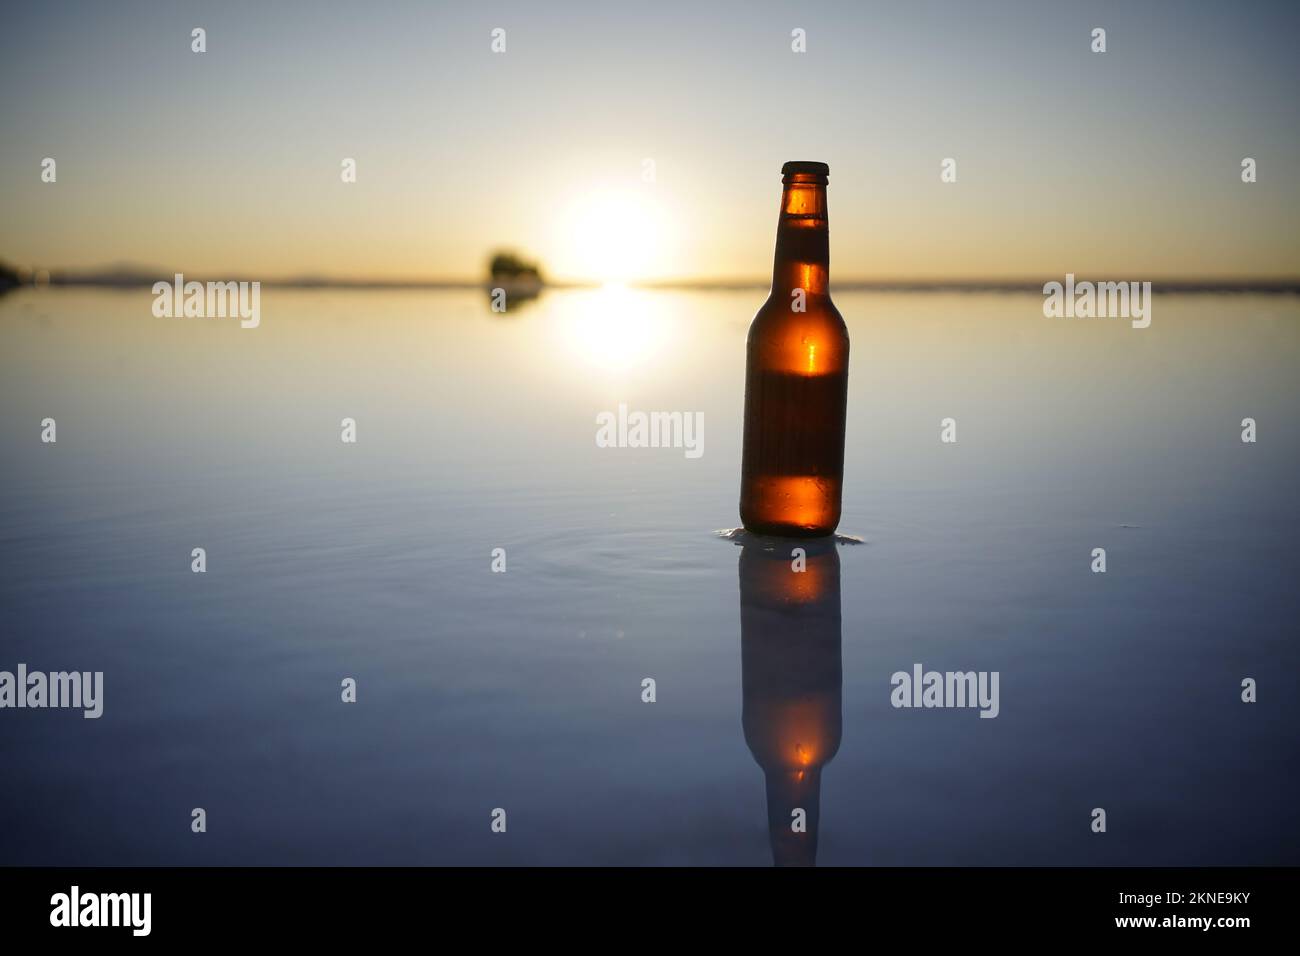 bottle of beer with reflection at sunset on Uyuni salt flats, Bolivia.Sony Alpha 7 III, 35mm. Stock Photo